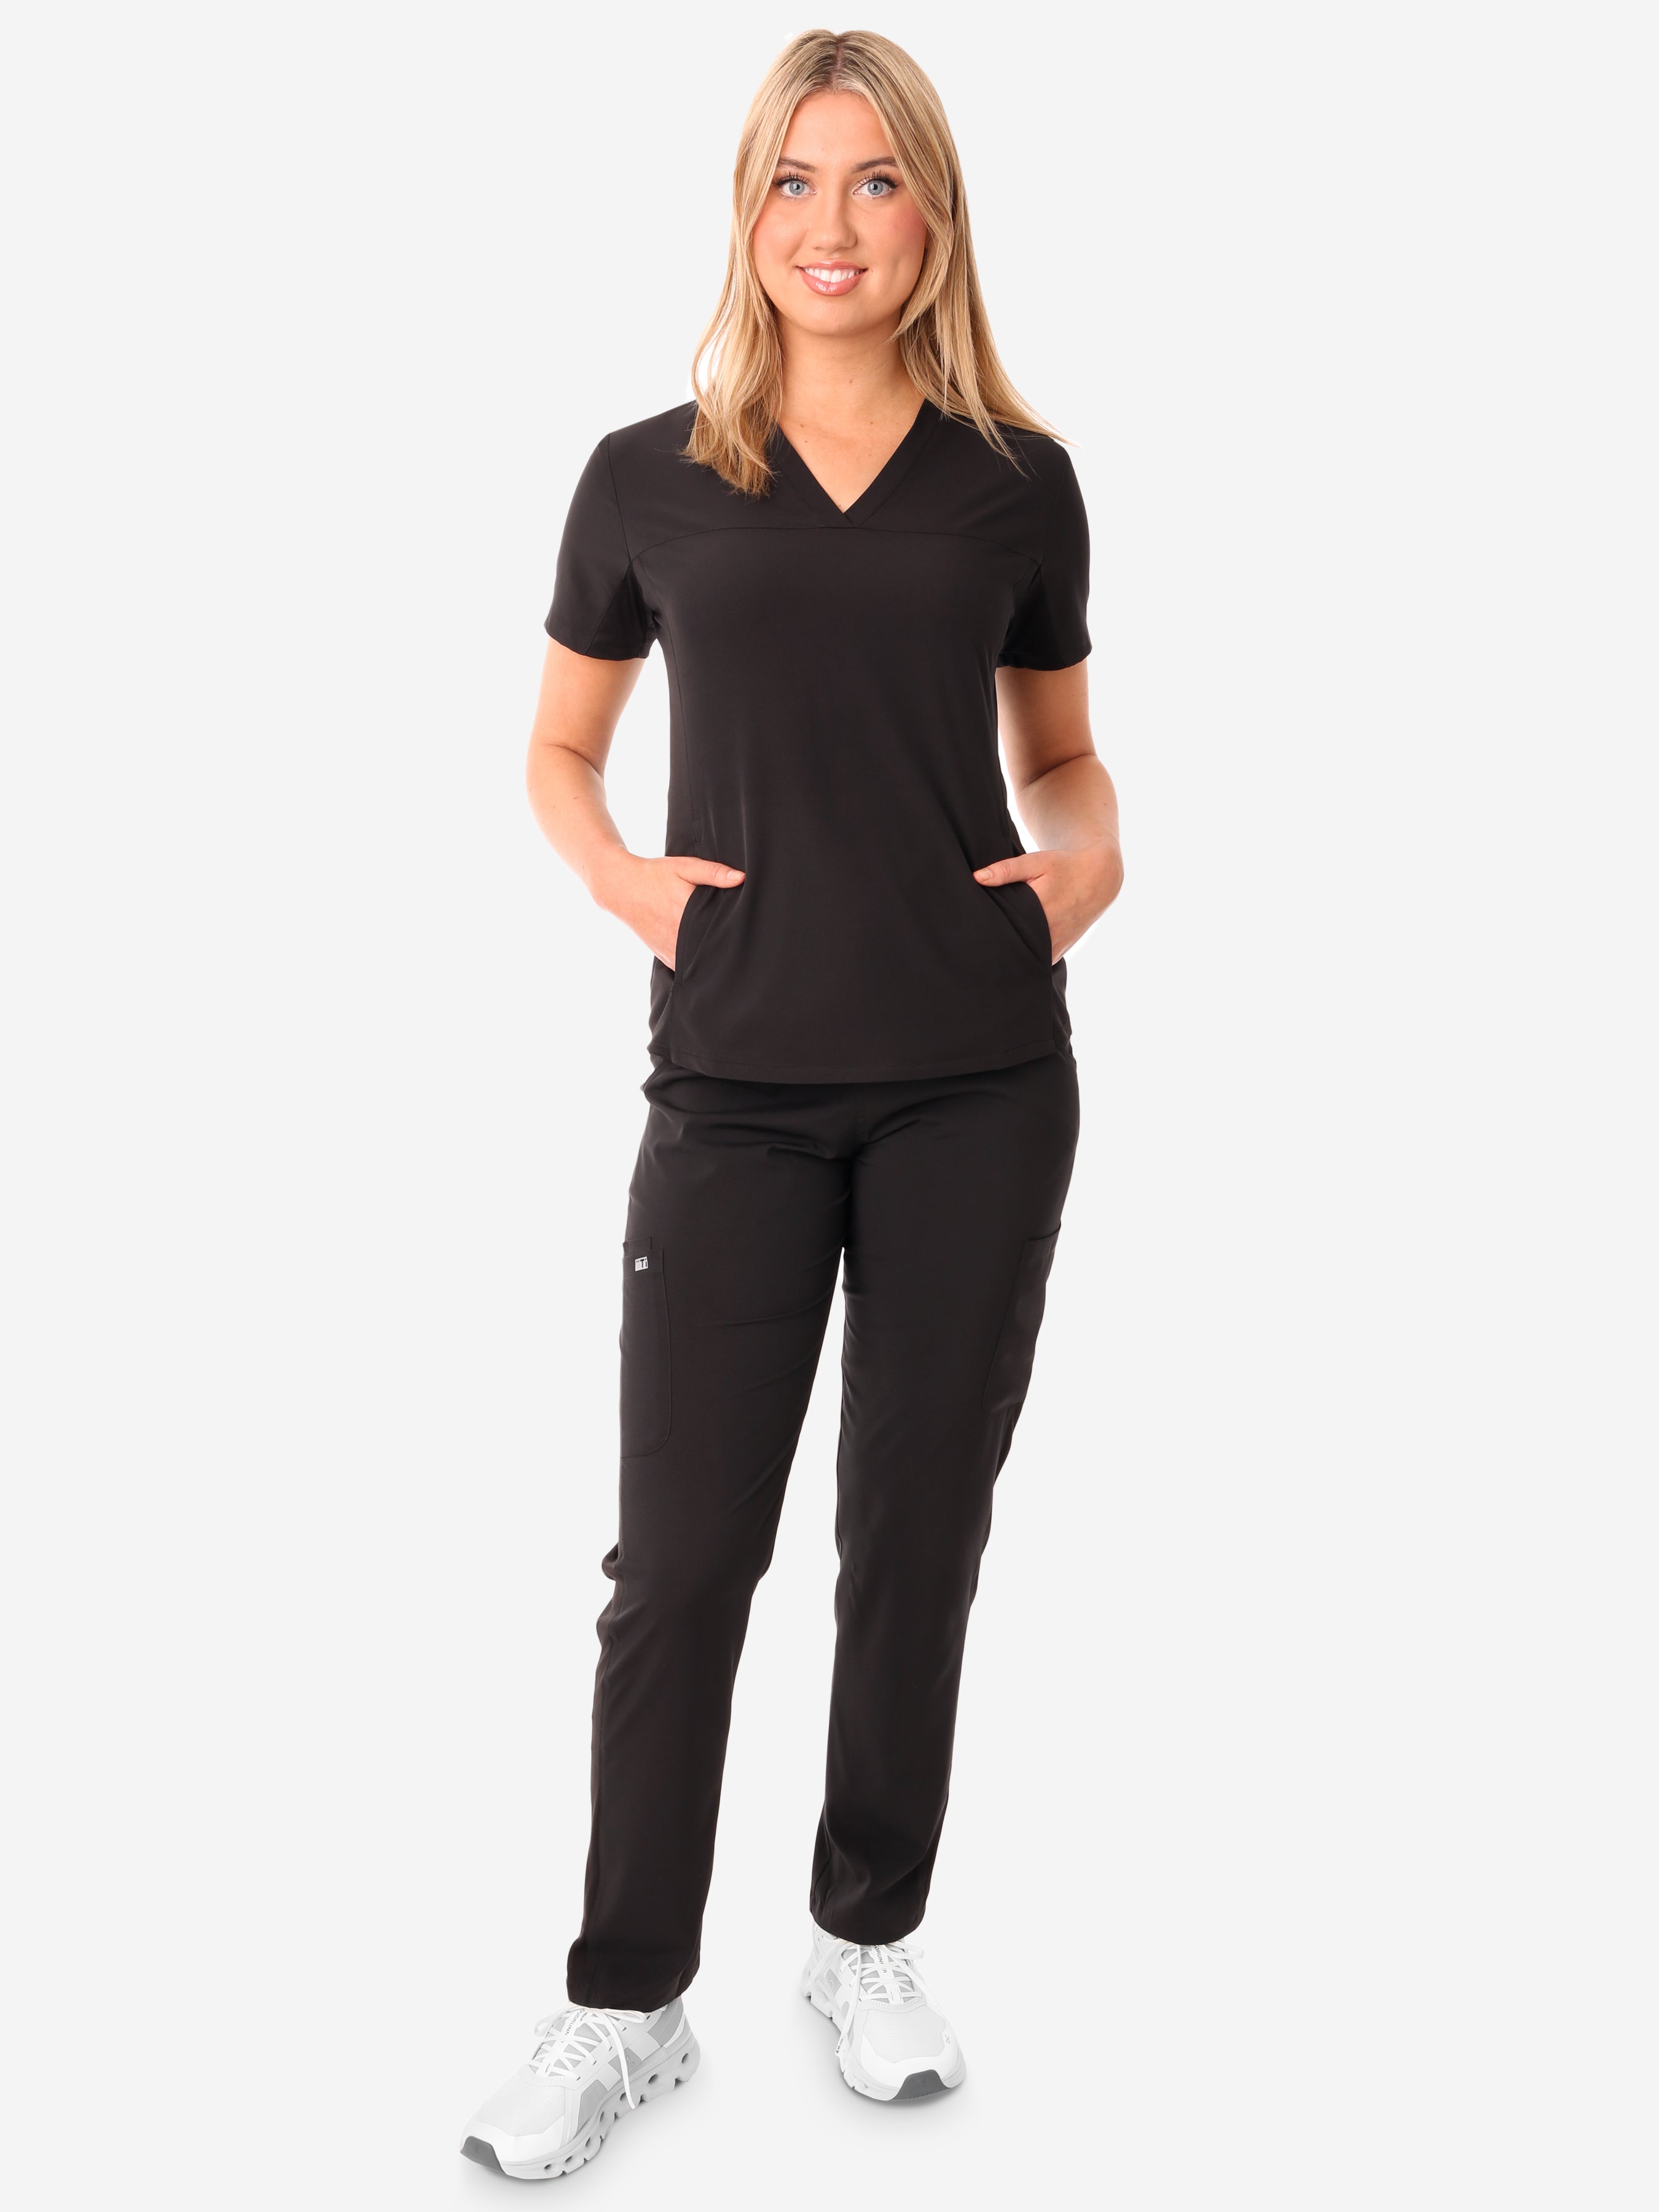 TiScrubs Stretch Women's Real Black Stash-Pocket Scrub Top + 9-Pocket Pants Full Body Front View